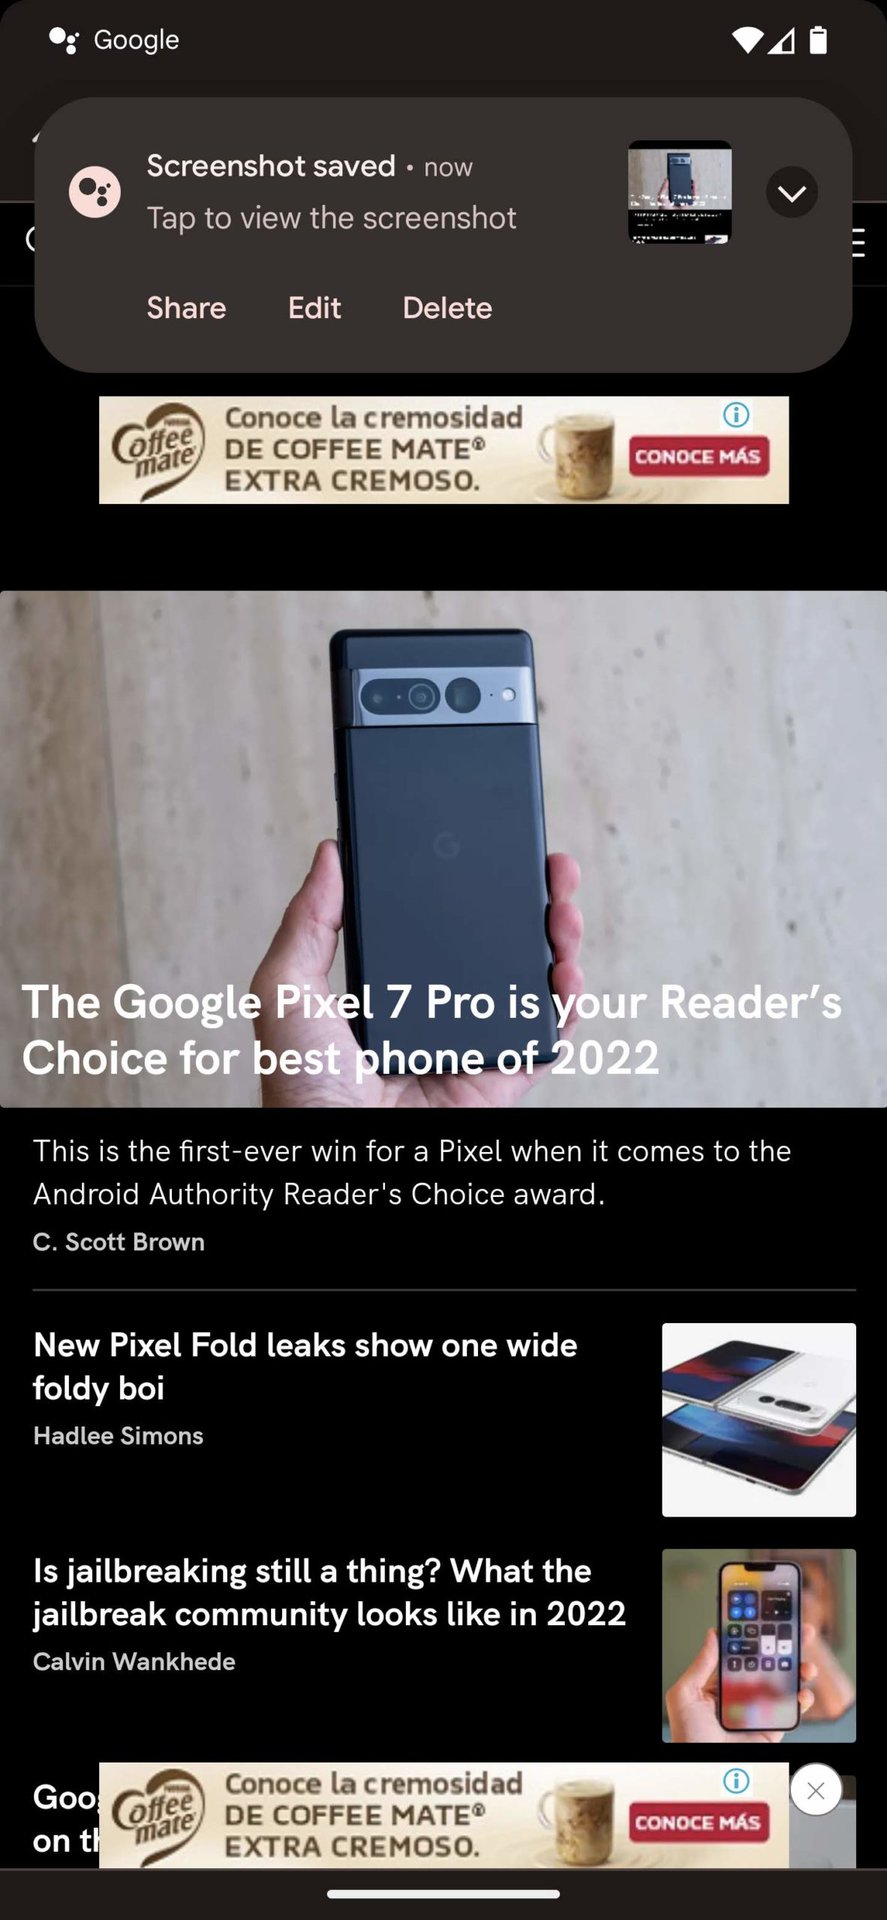 Take a screenshot on Pixel 7 using Google Assistant 4